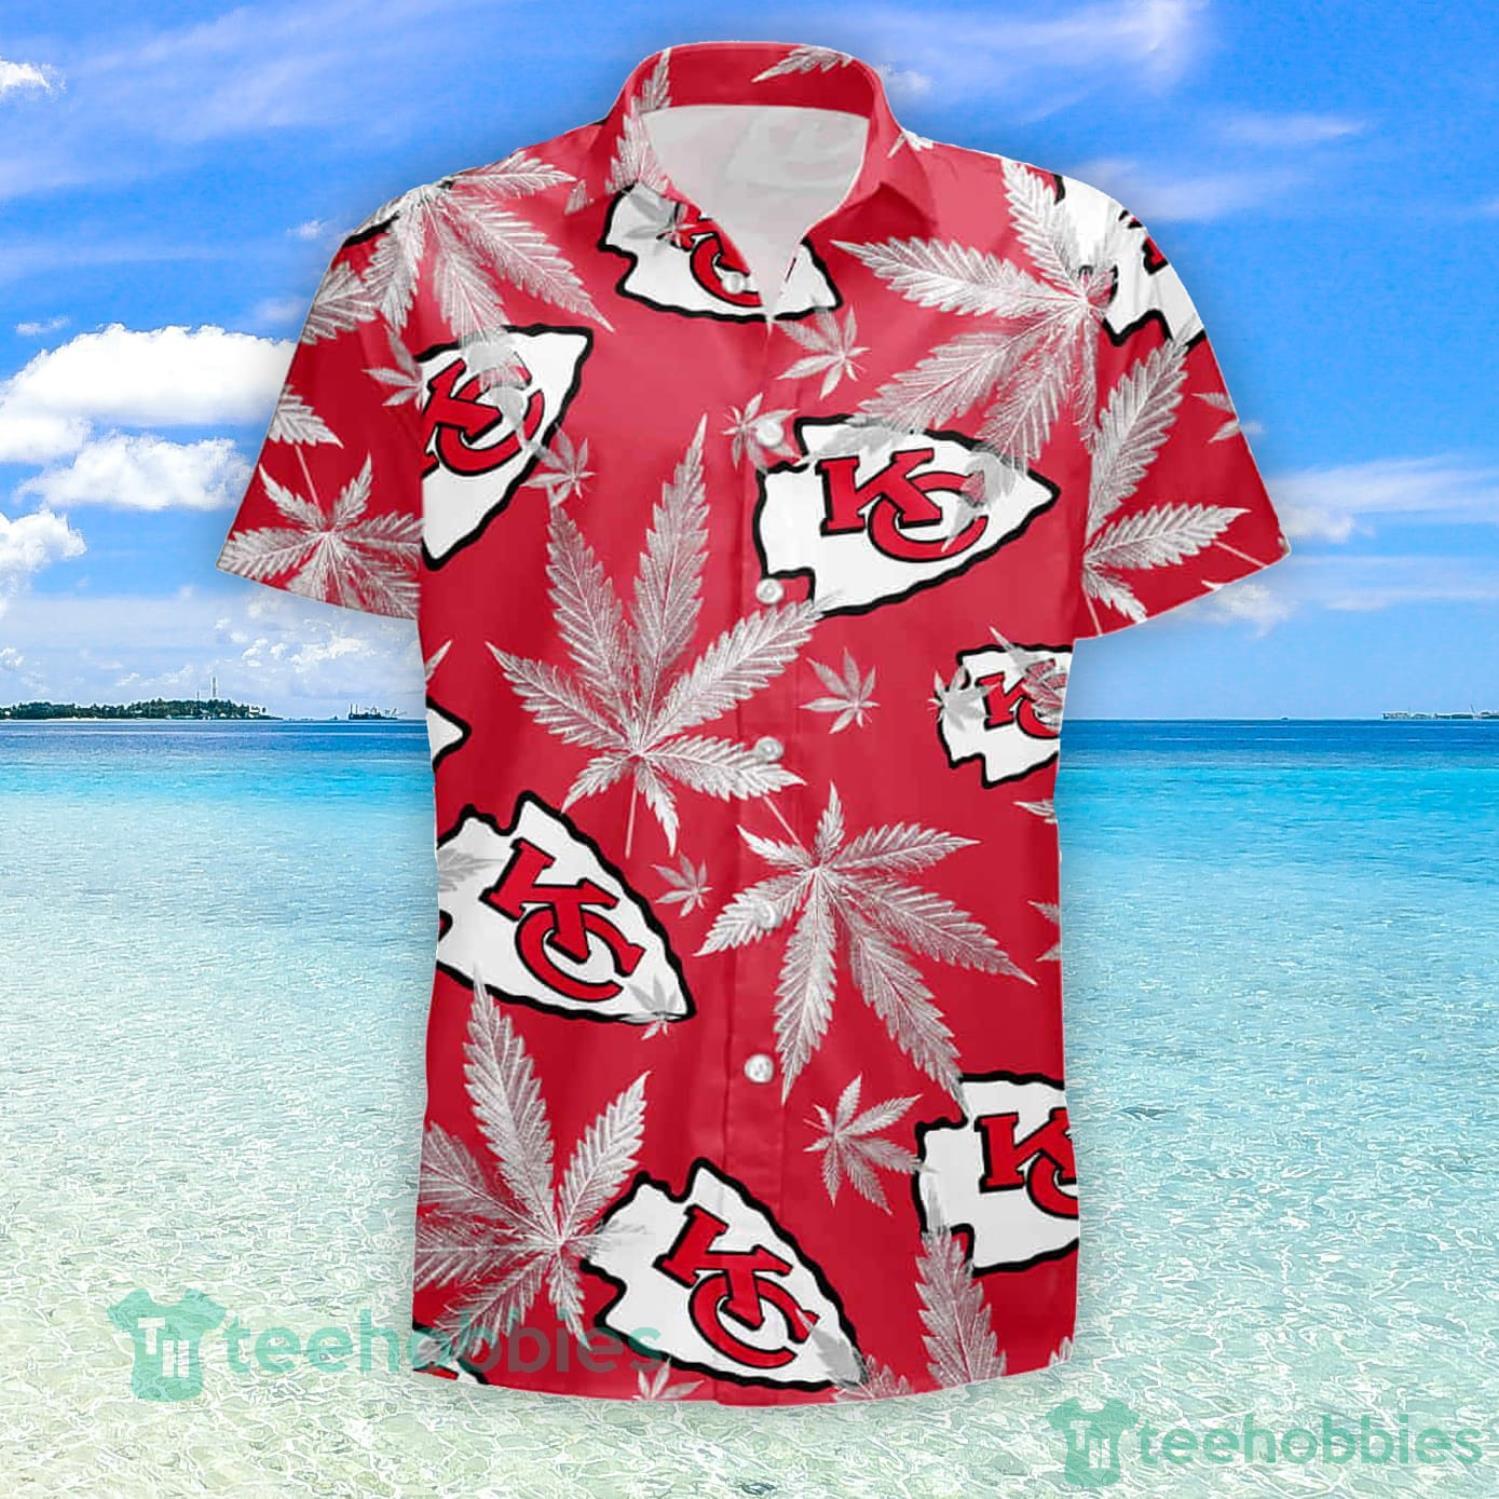 kc chiefs tropical shirt